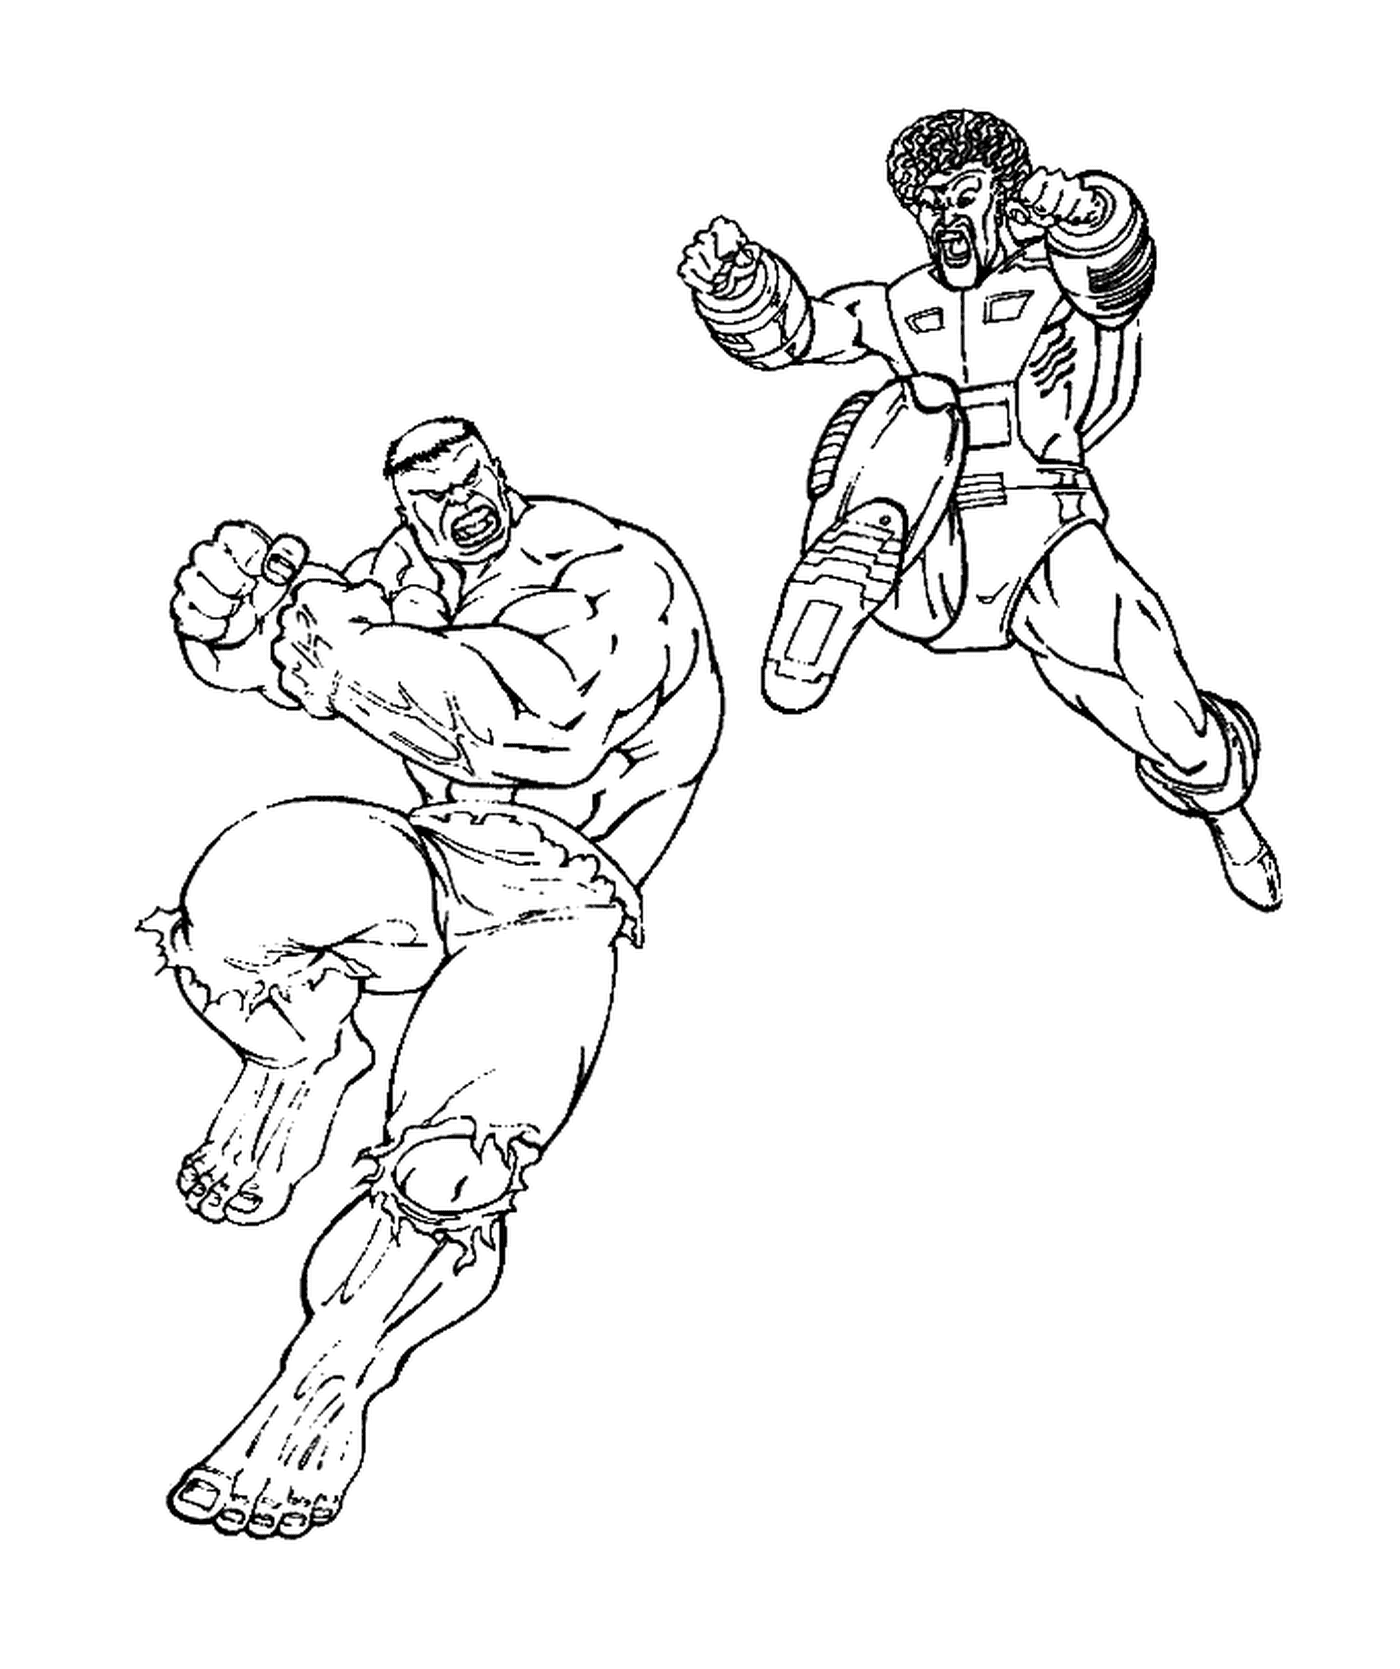  Hulk fighting a bad guy 